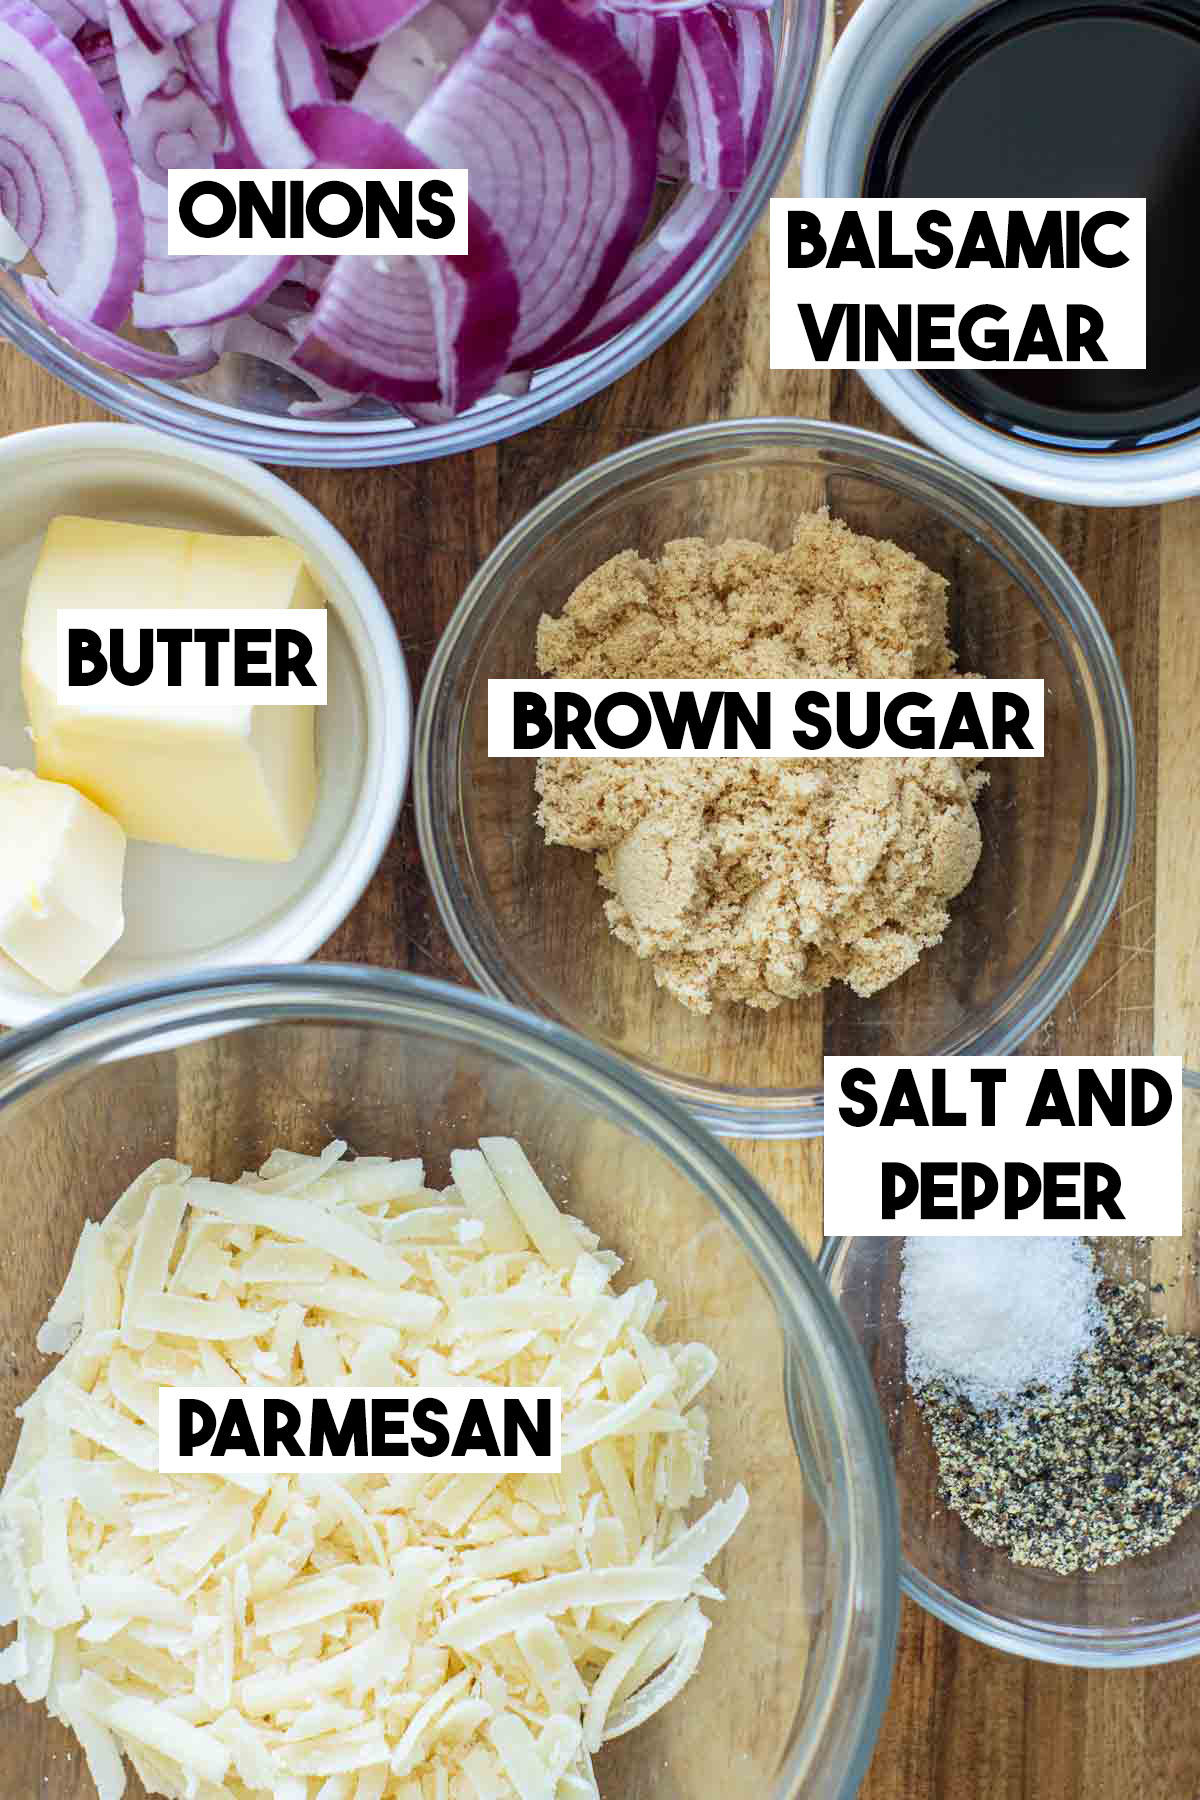 Ingredients for the toppings: parmesan, butter, brown sugar, sliced onions, salt, pepper, balsamic vinegar.